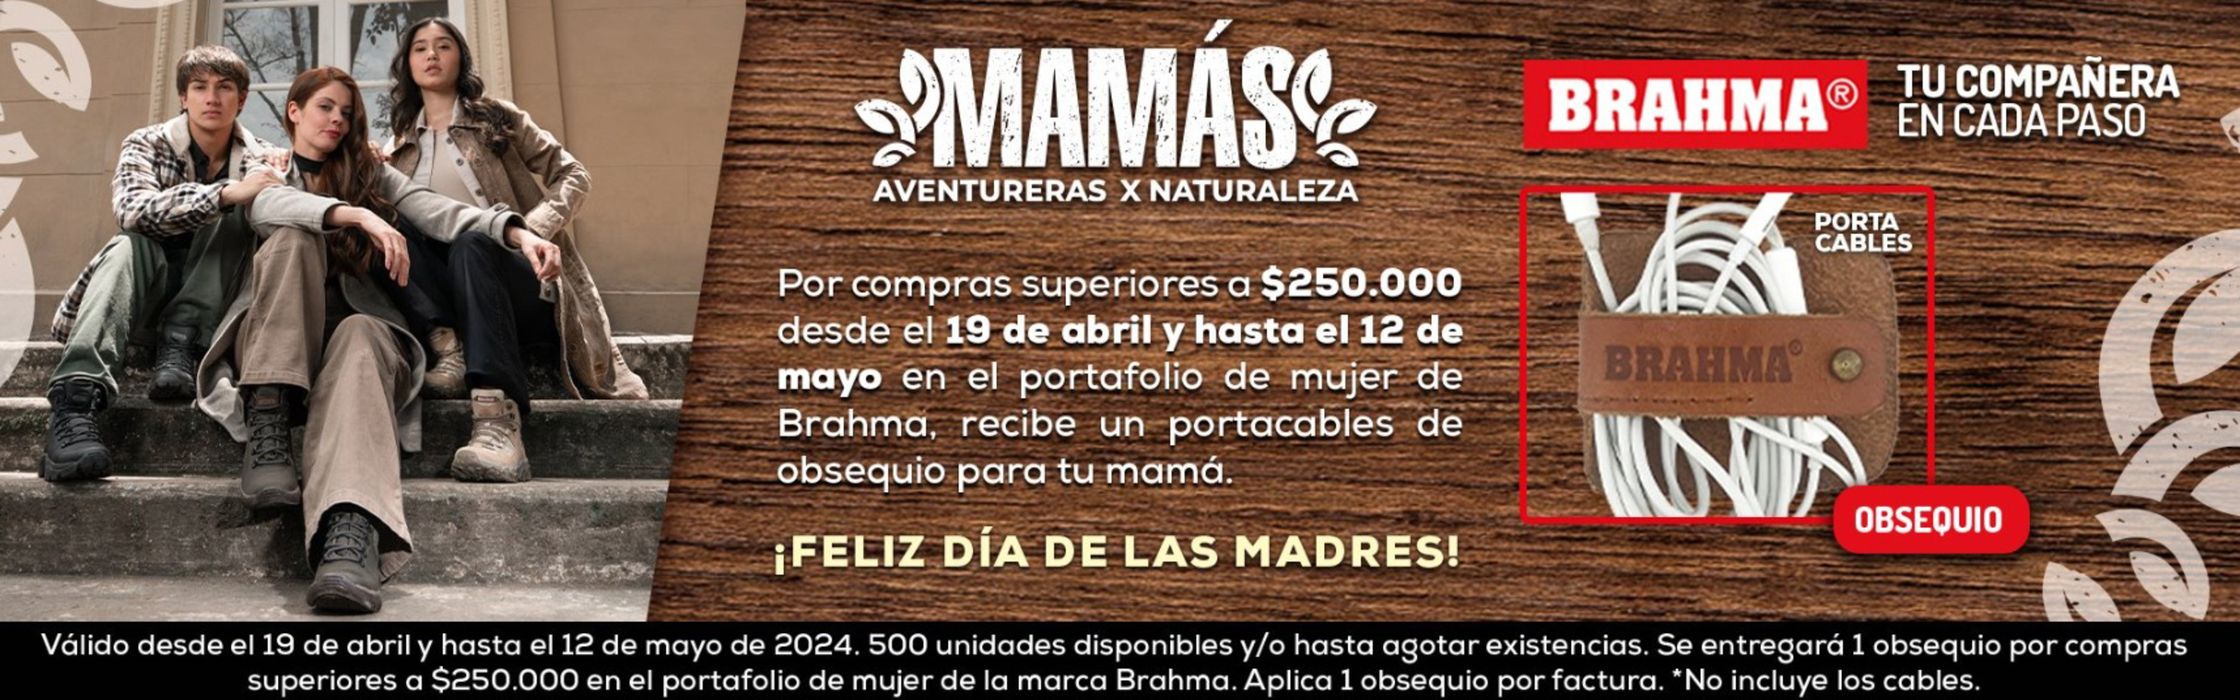 Catálogo Brahma en Barranquilla | Feliz dia de madres! | 25/4/2024 - 12/5/2024